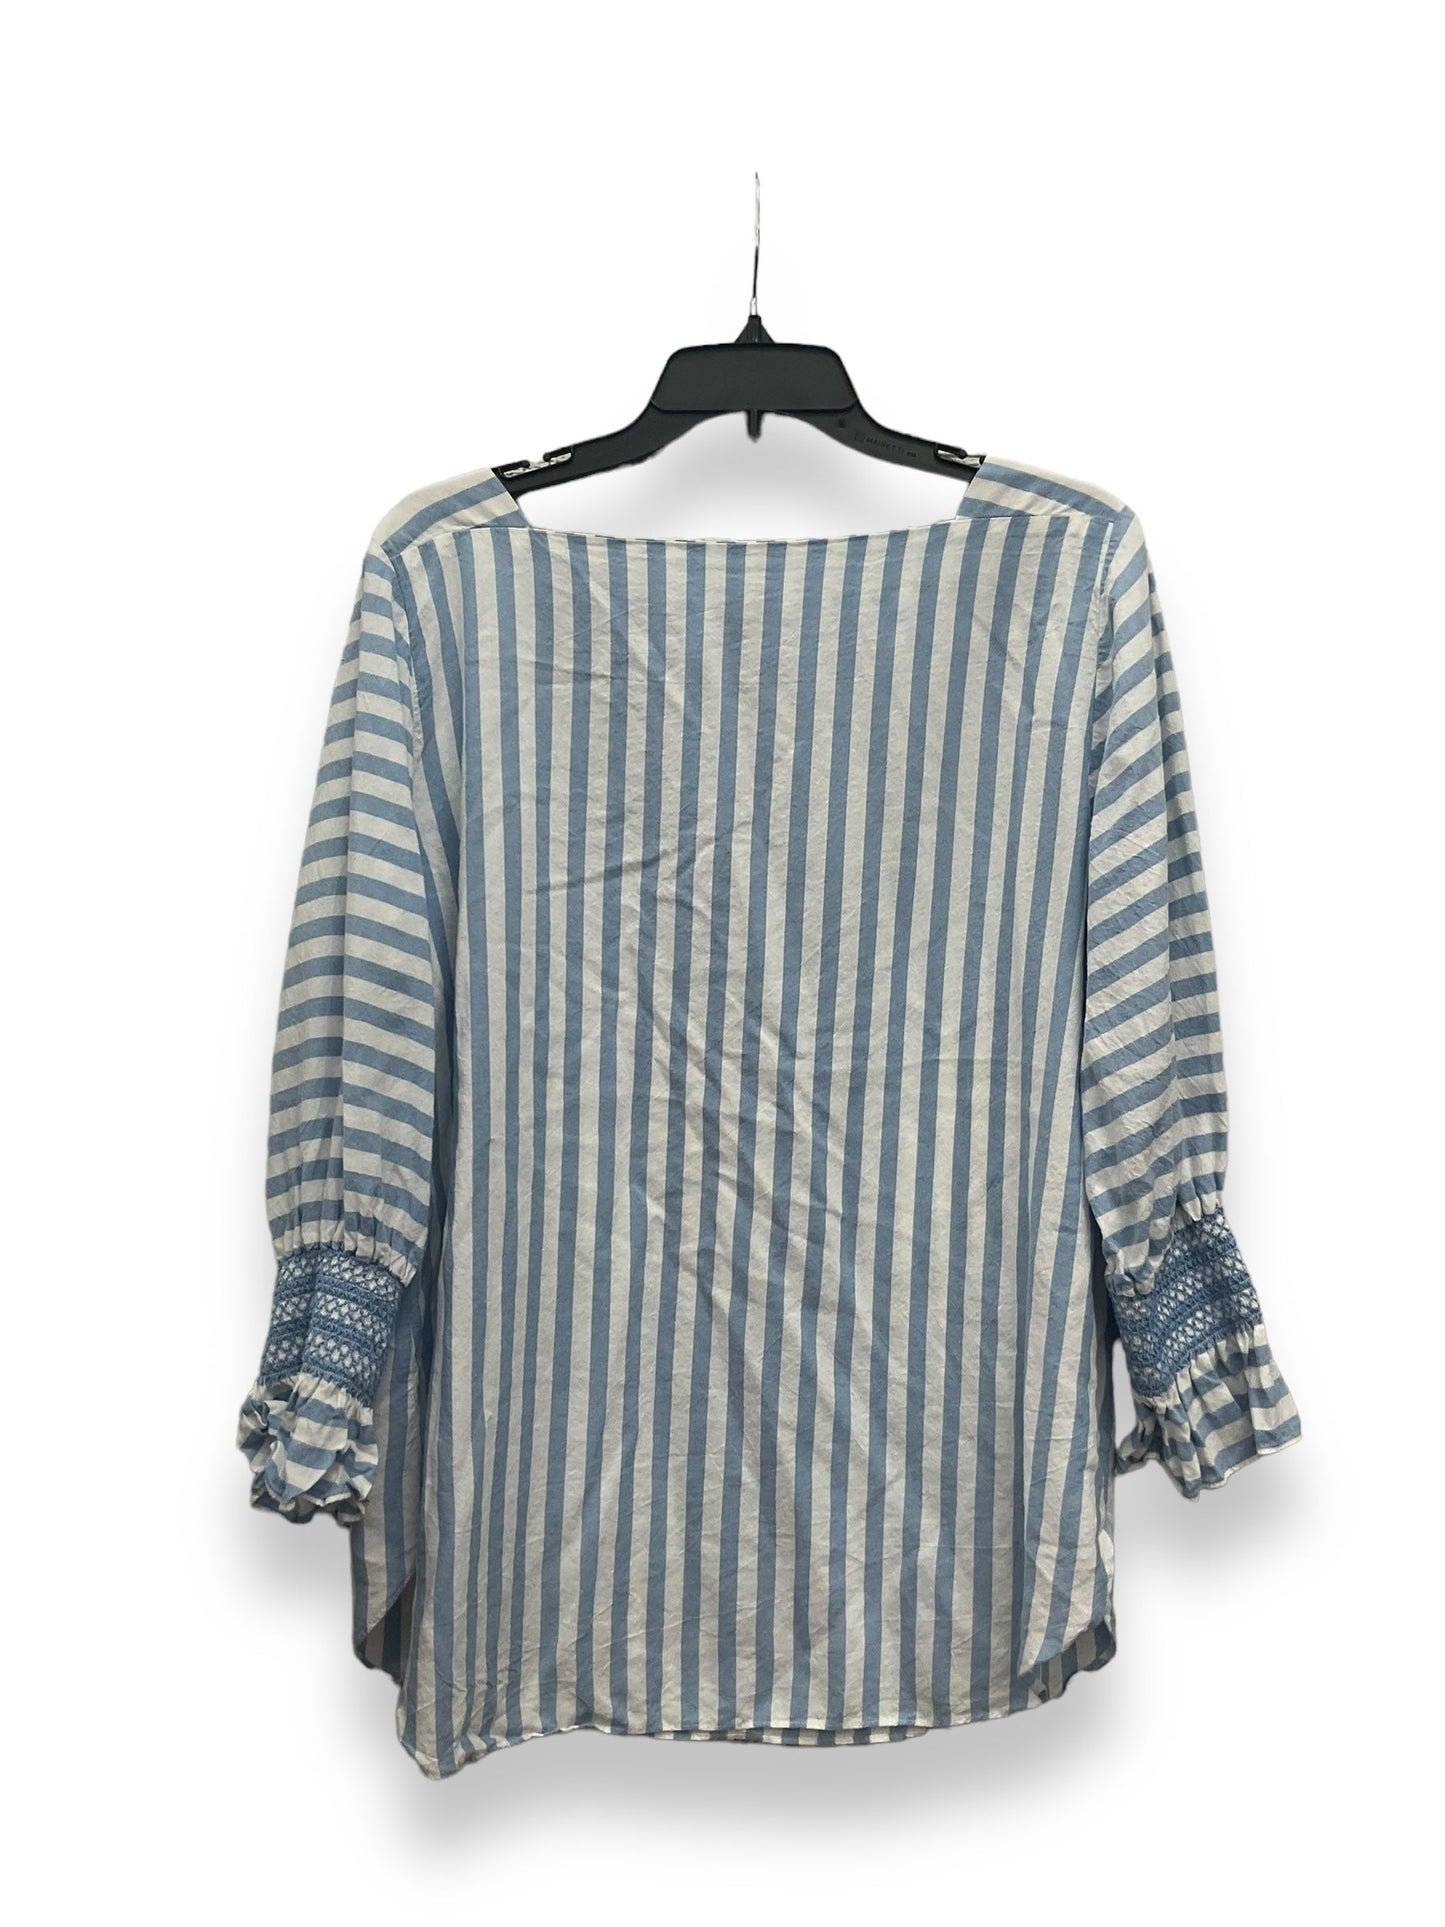 Striped Pattern Top Short Sleeve Jones New York, Size L